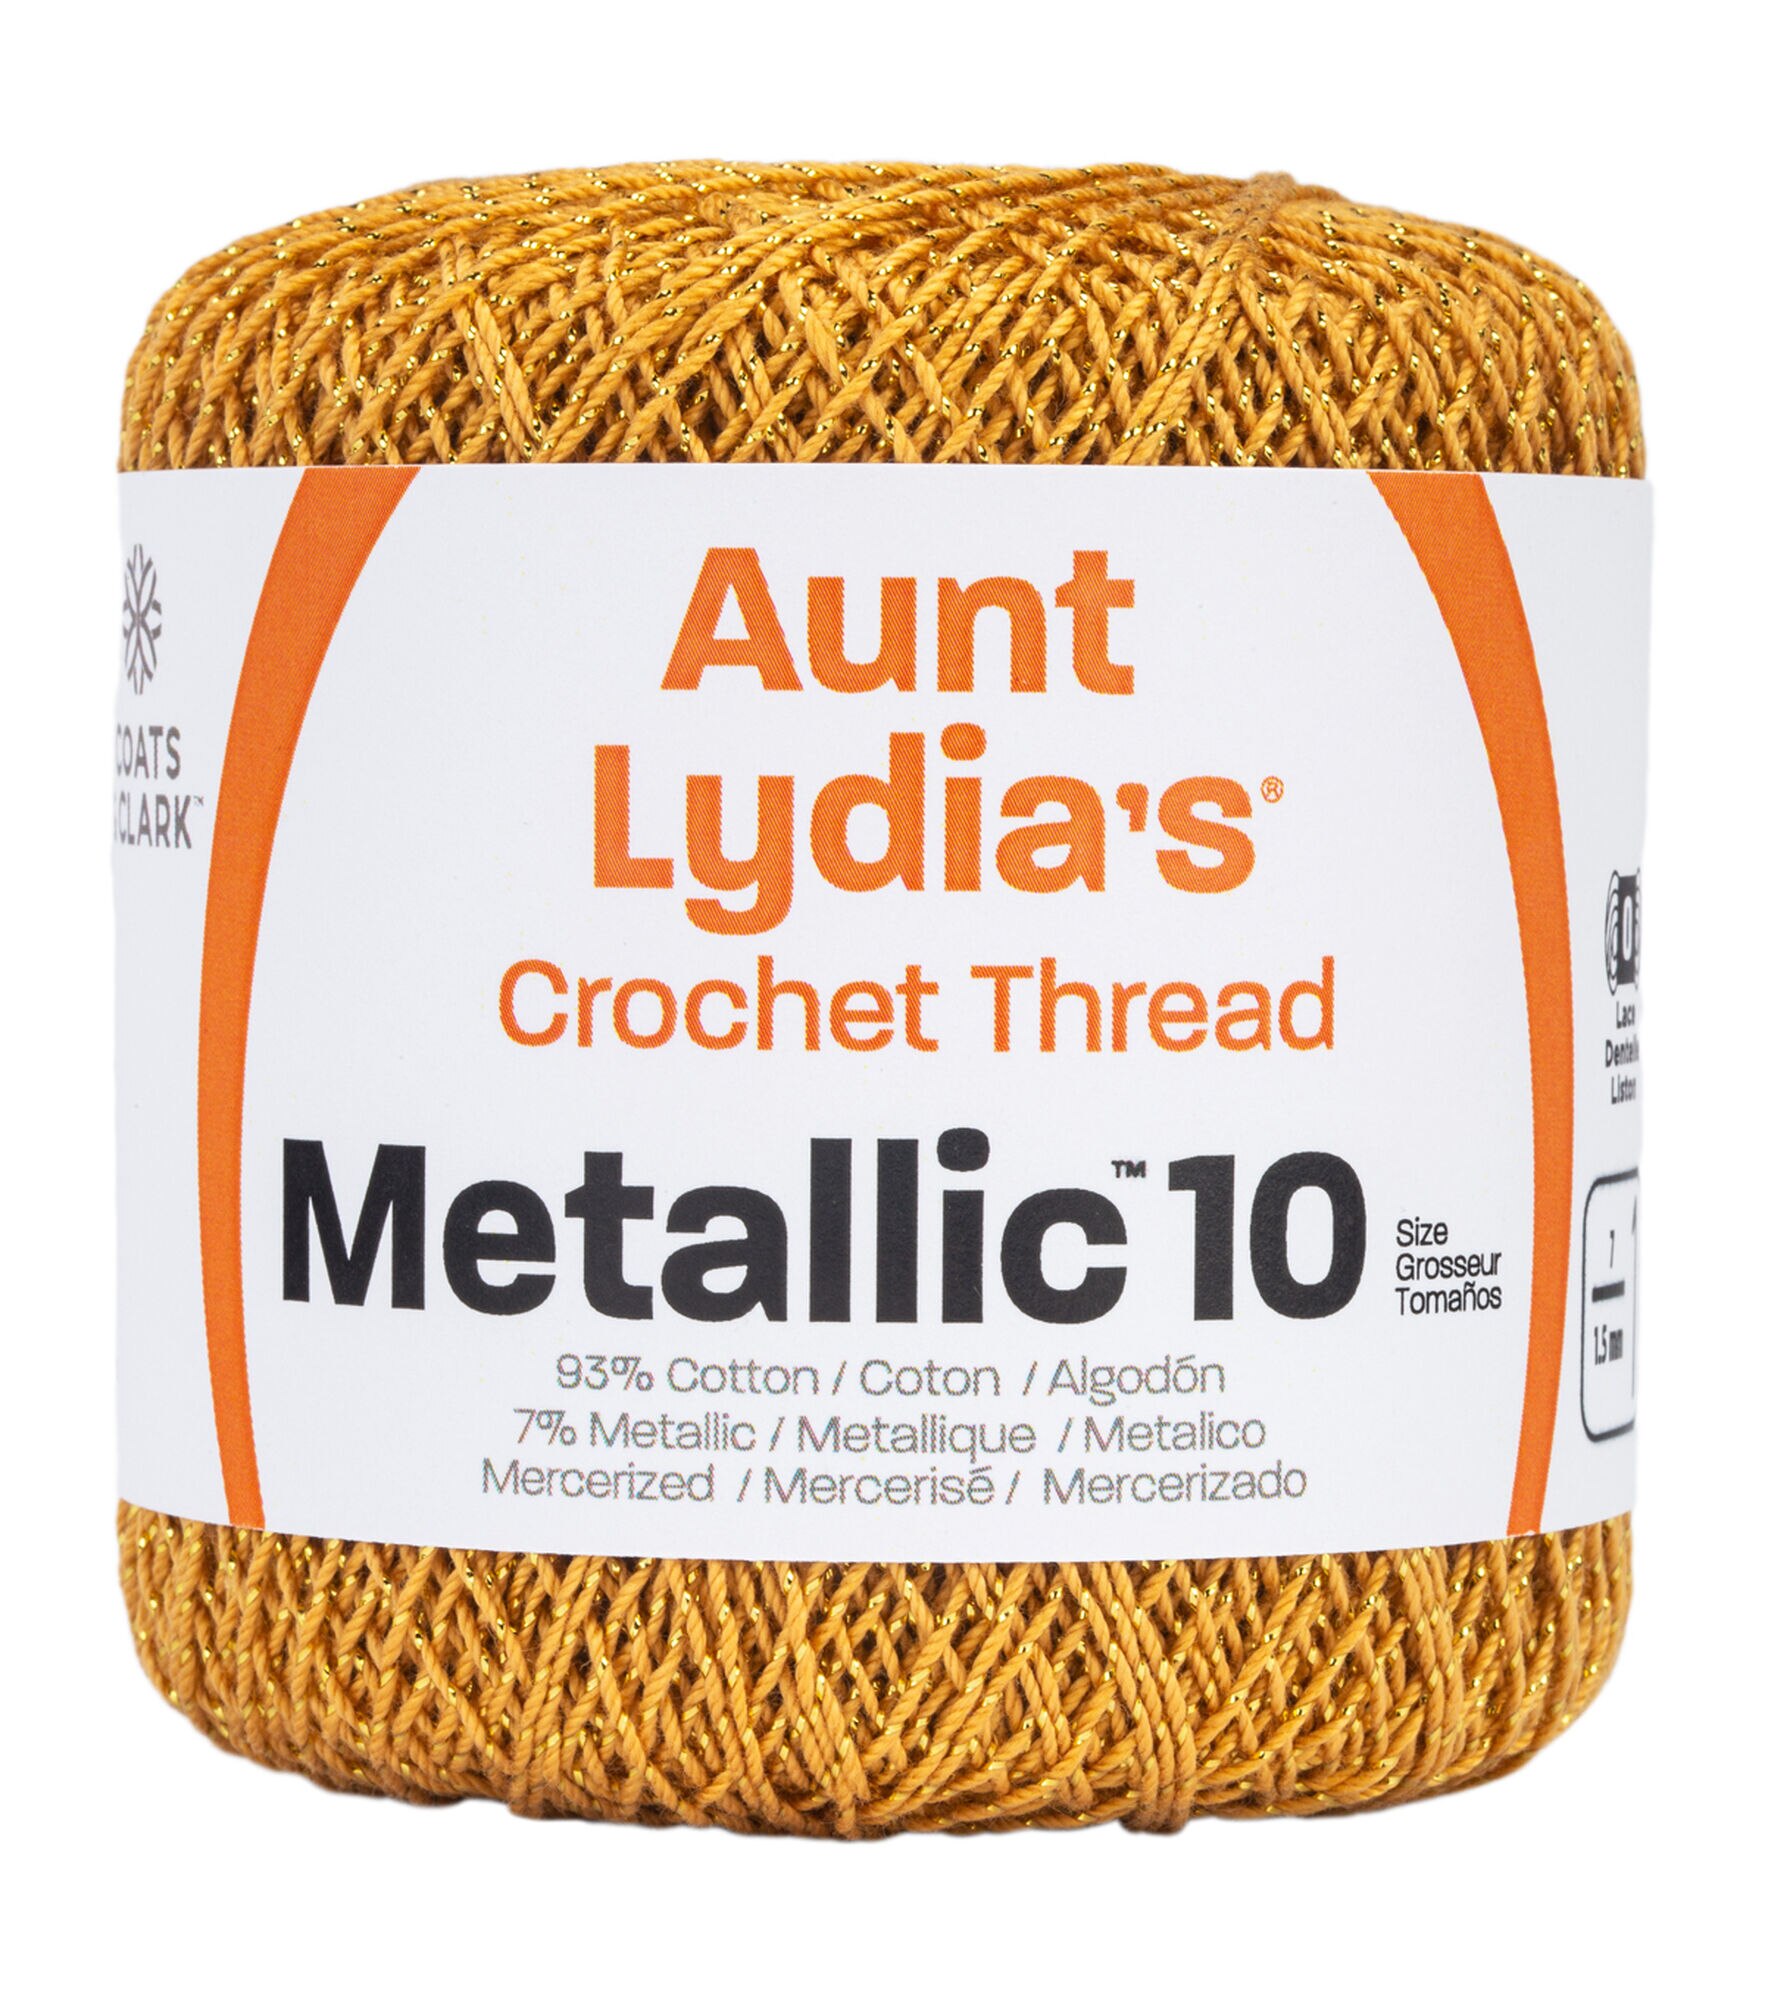 Aunt Lydia's Crochet Thread - Size 10 - Golden Yellow (2-Pack)